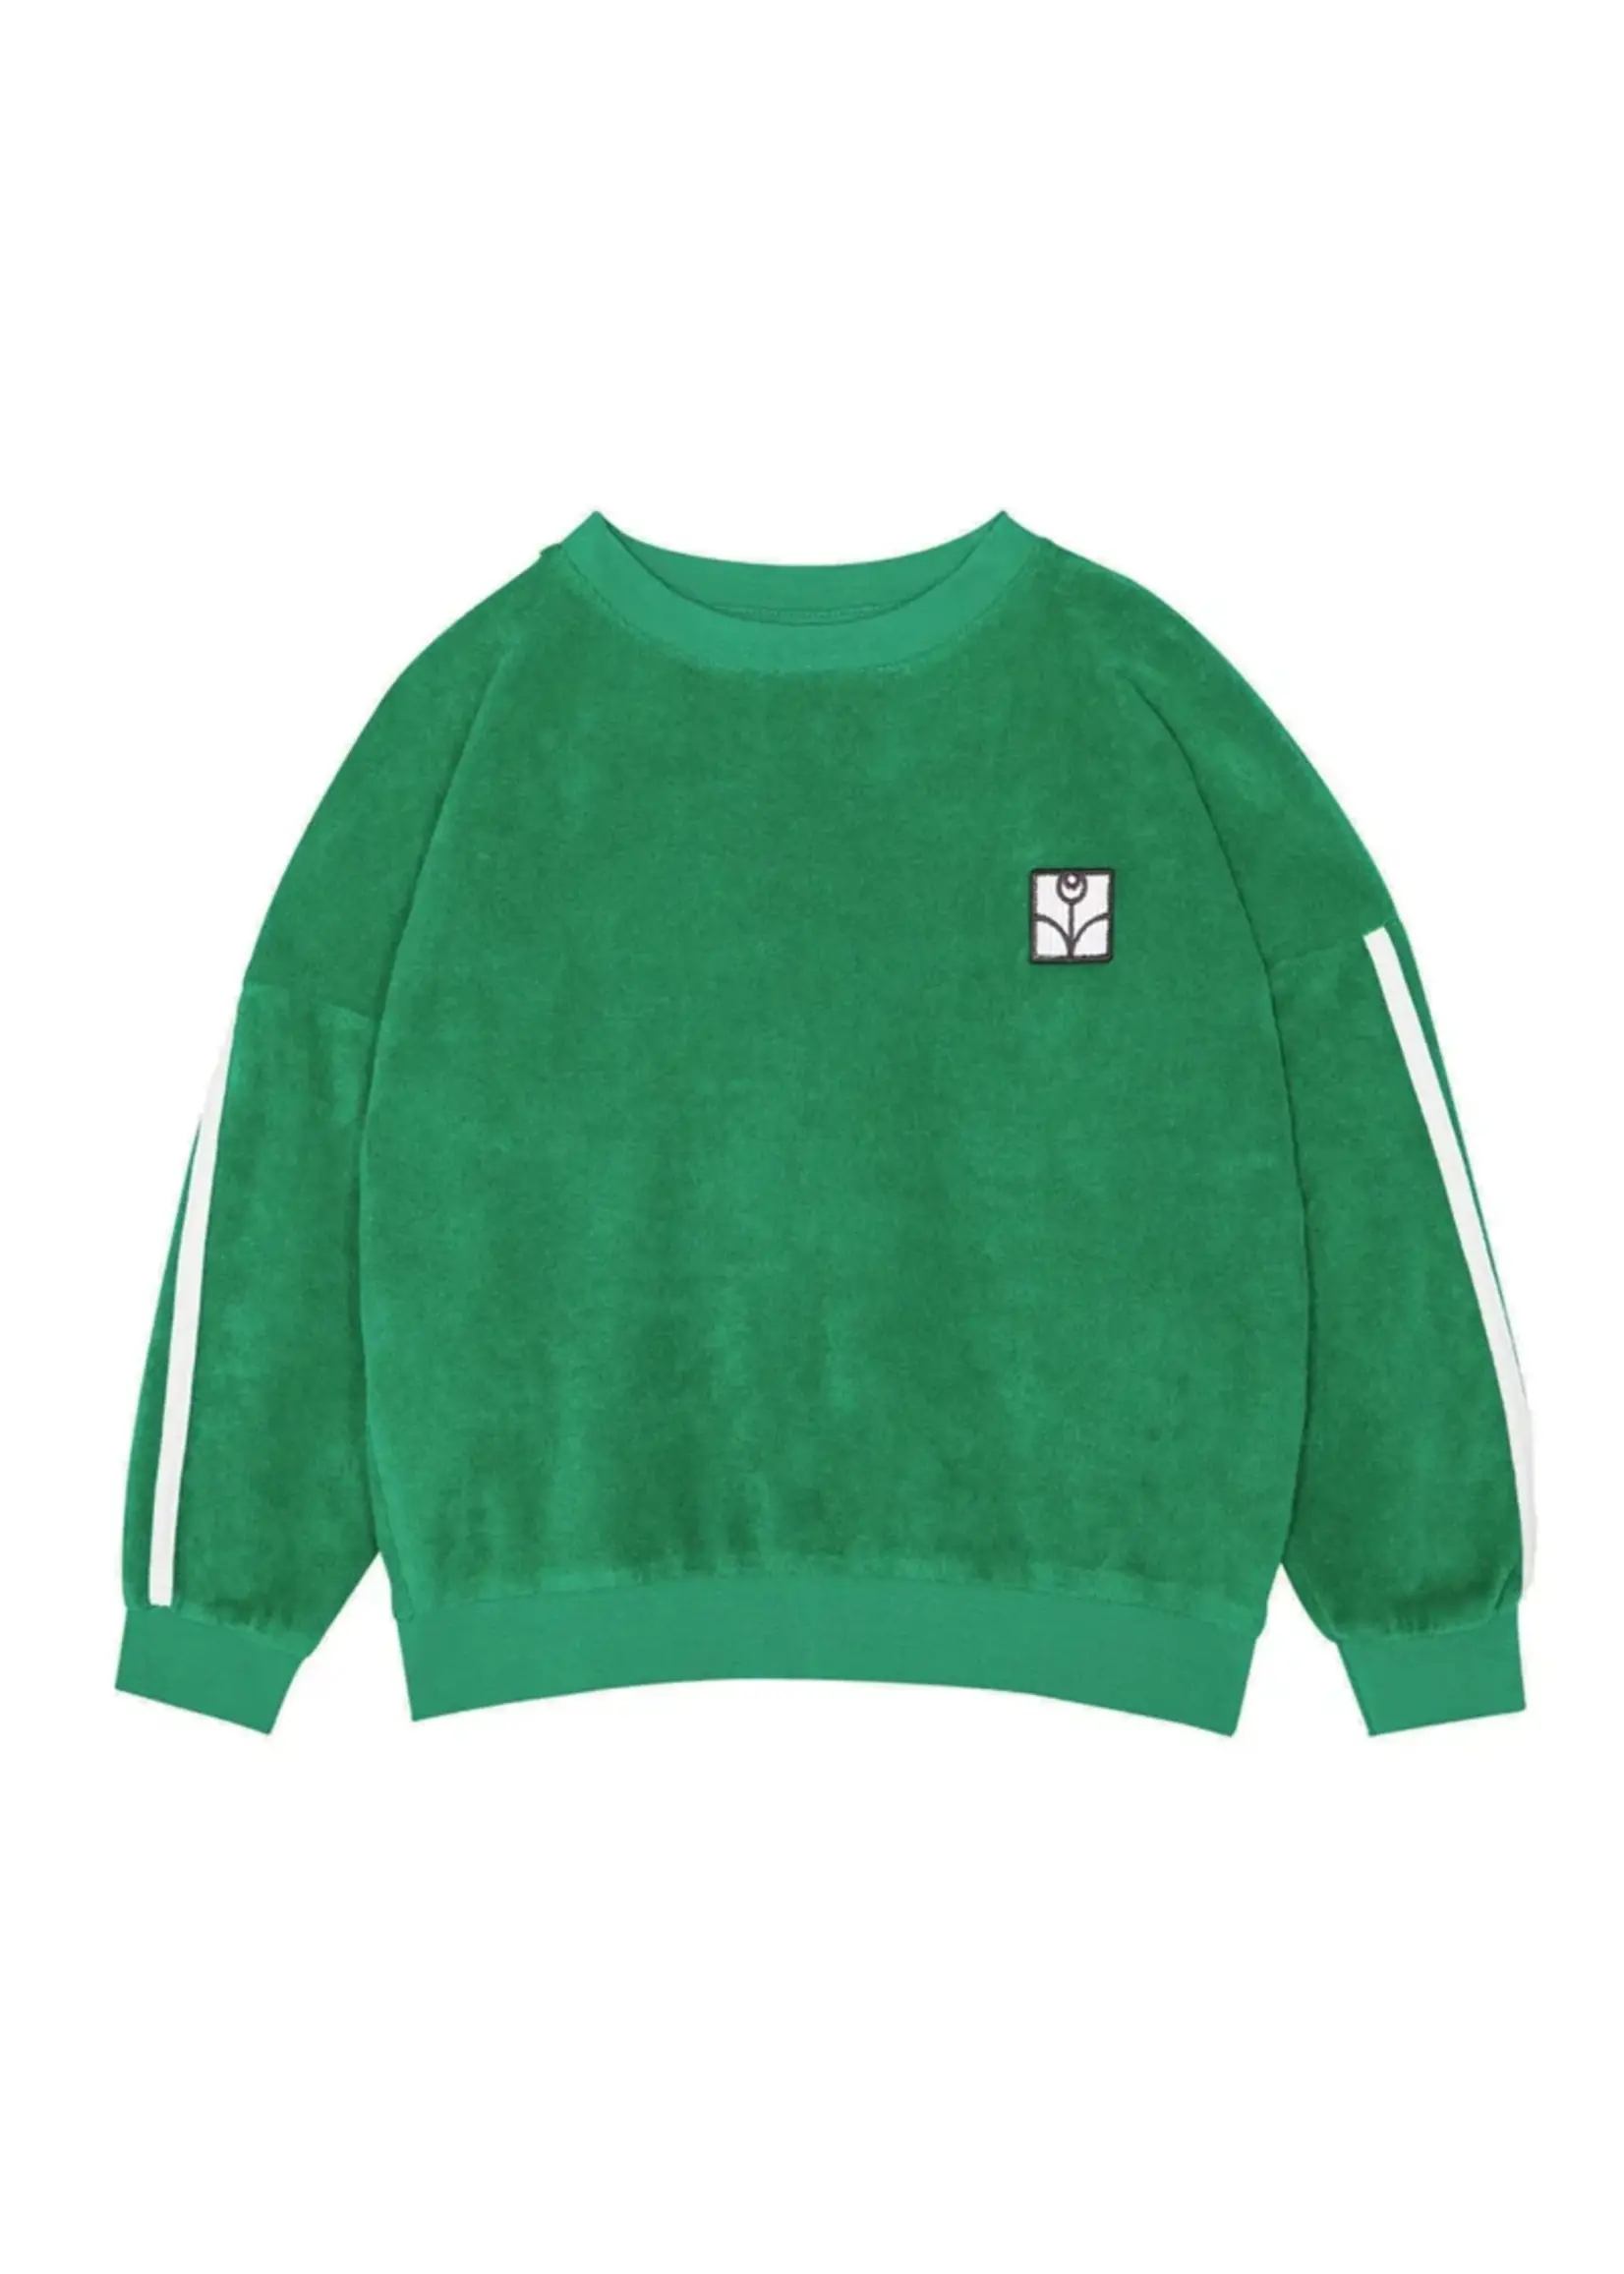 THE CAMPAMENTO CAMPAMENTO sweater groen badstof